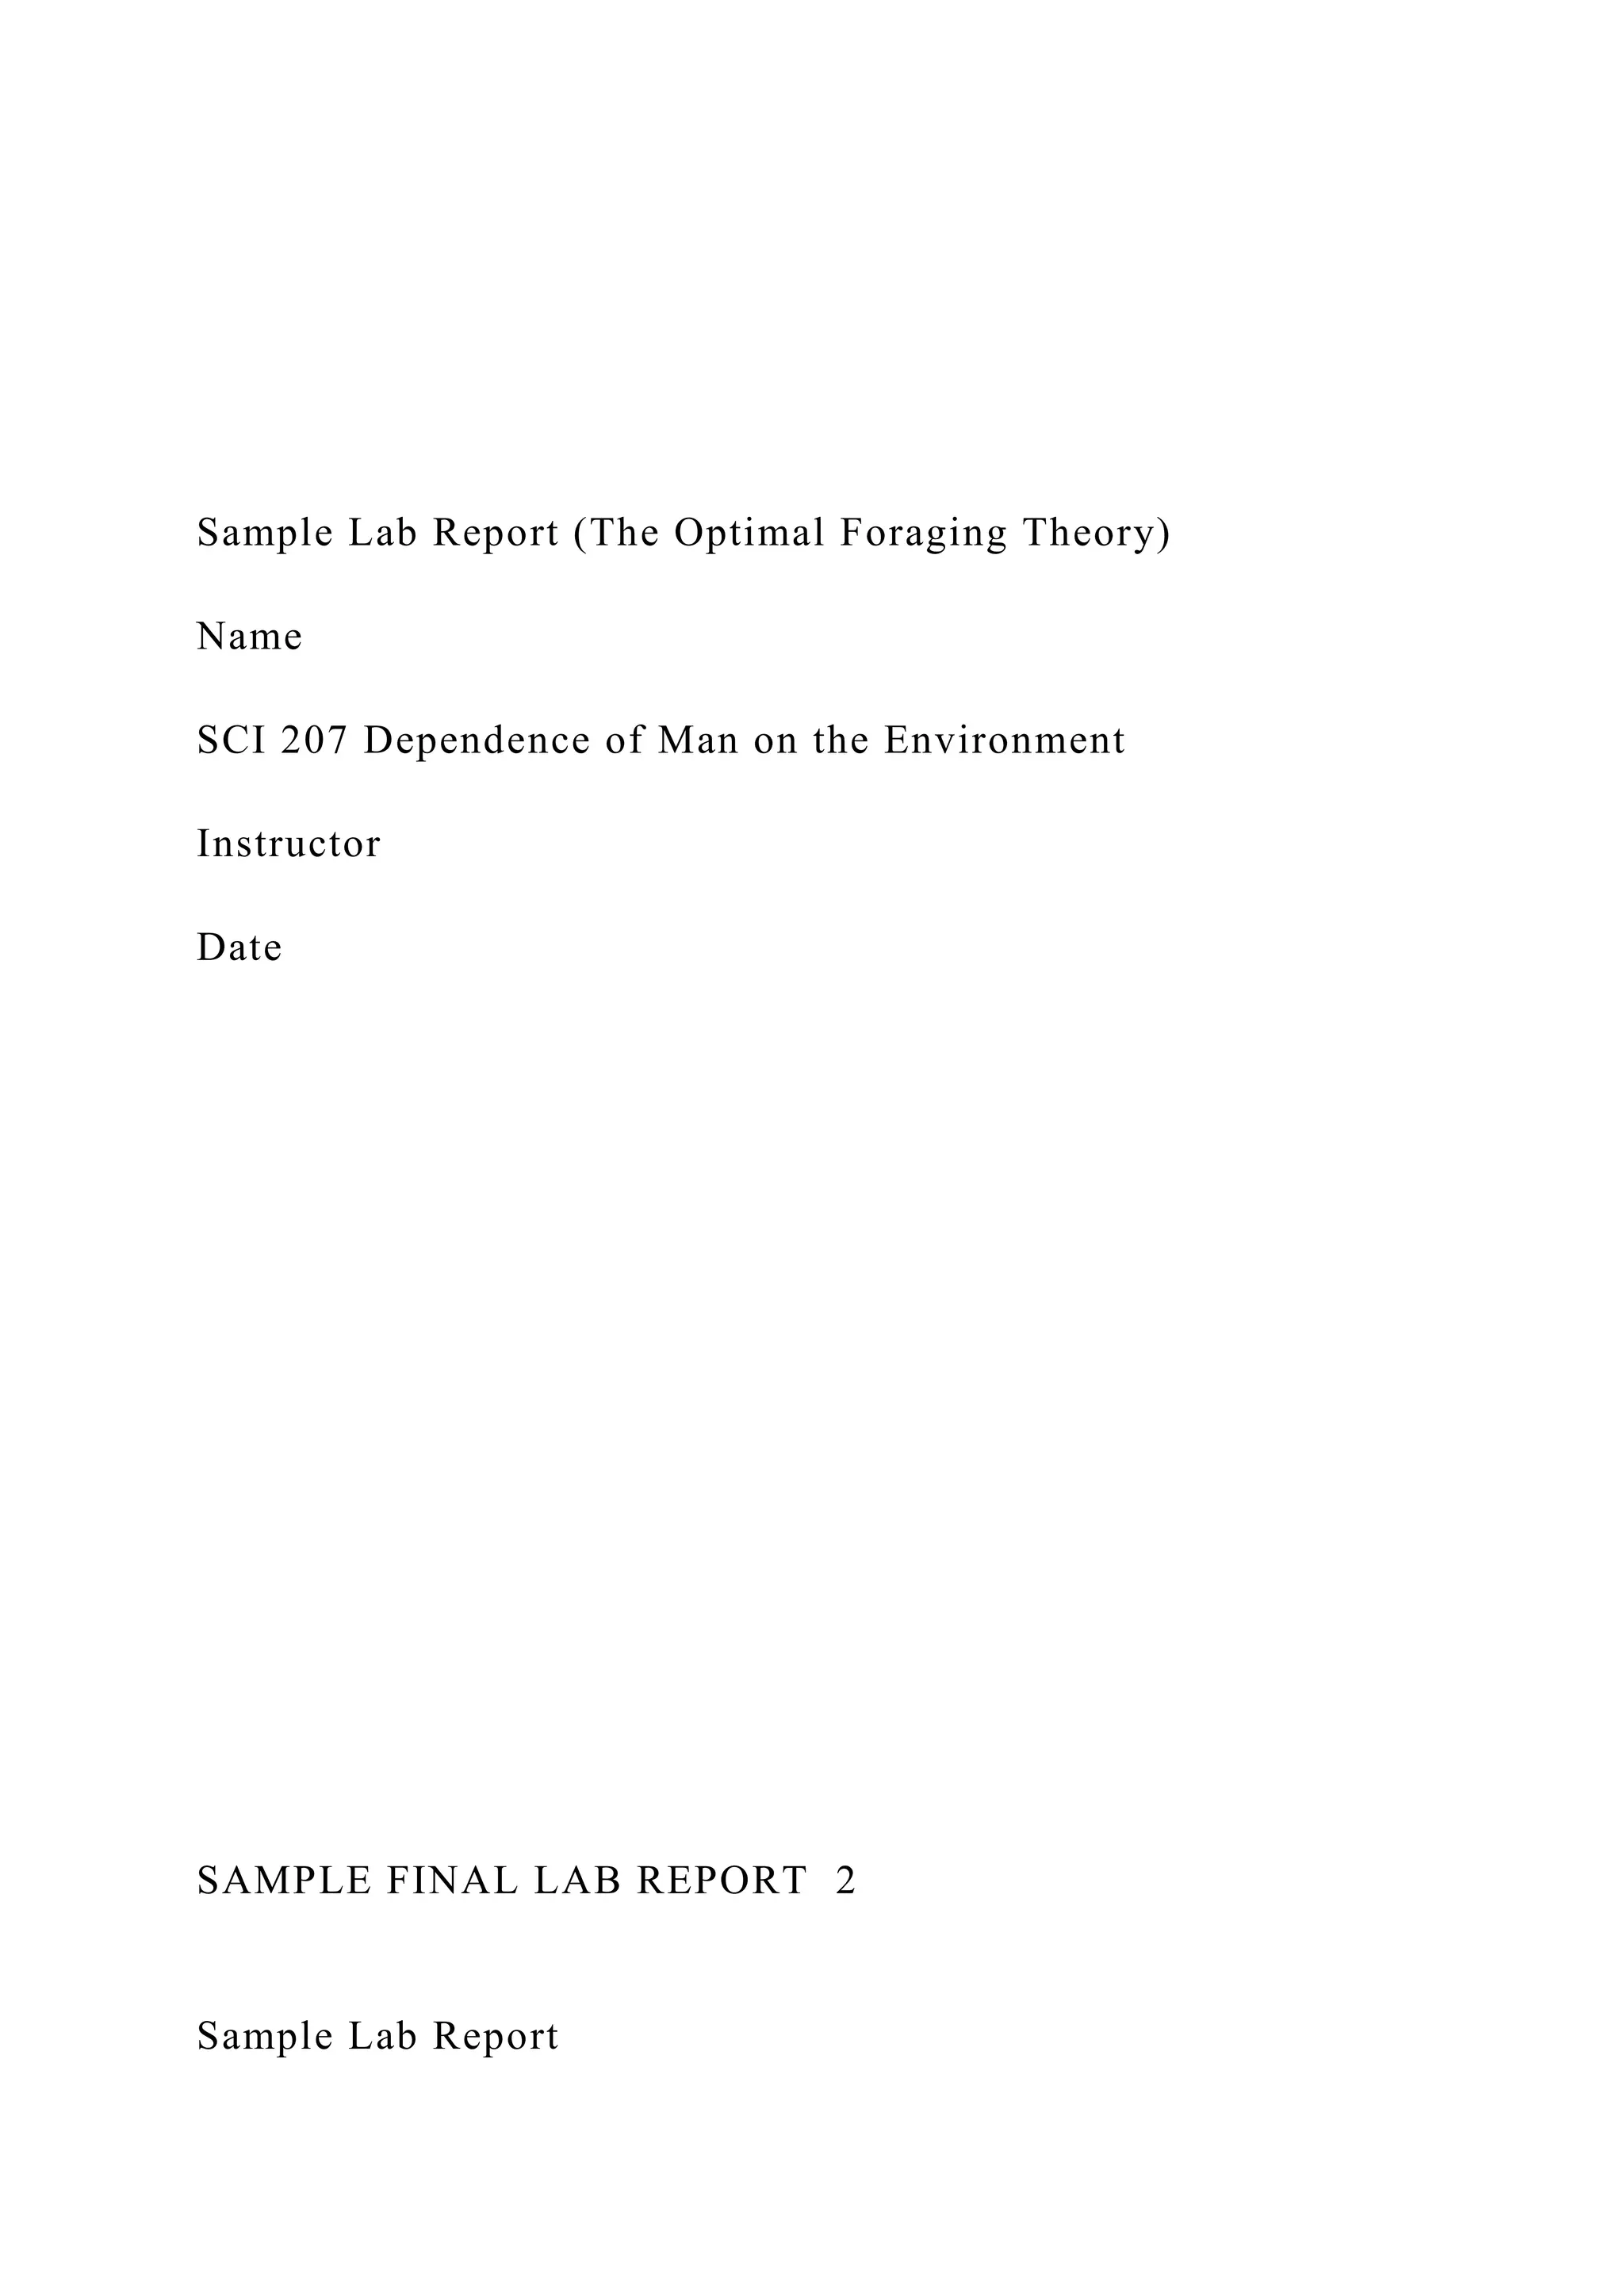 sci 207 final lab report